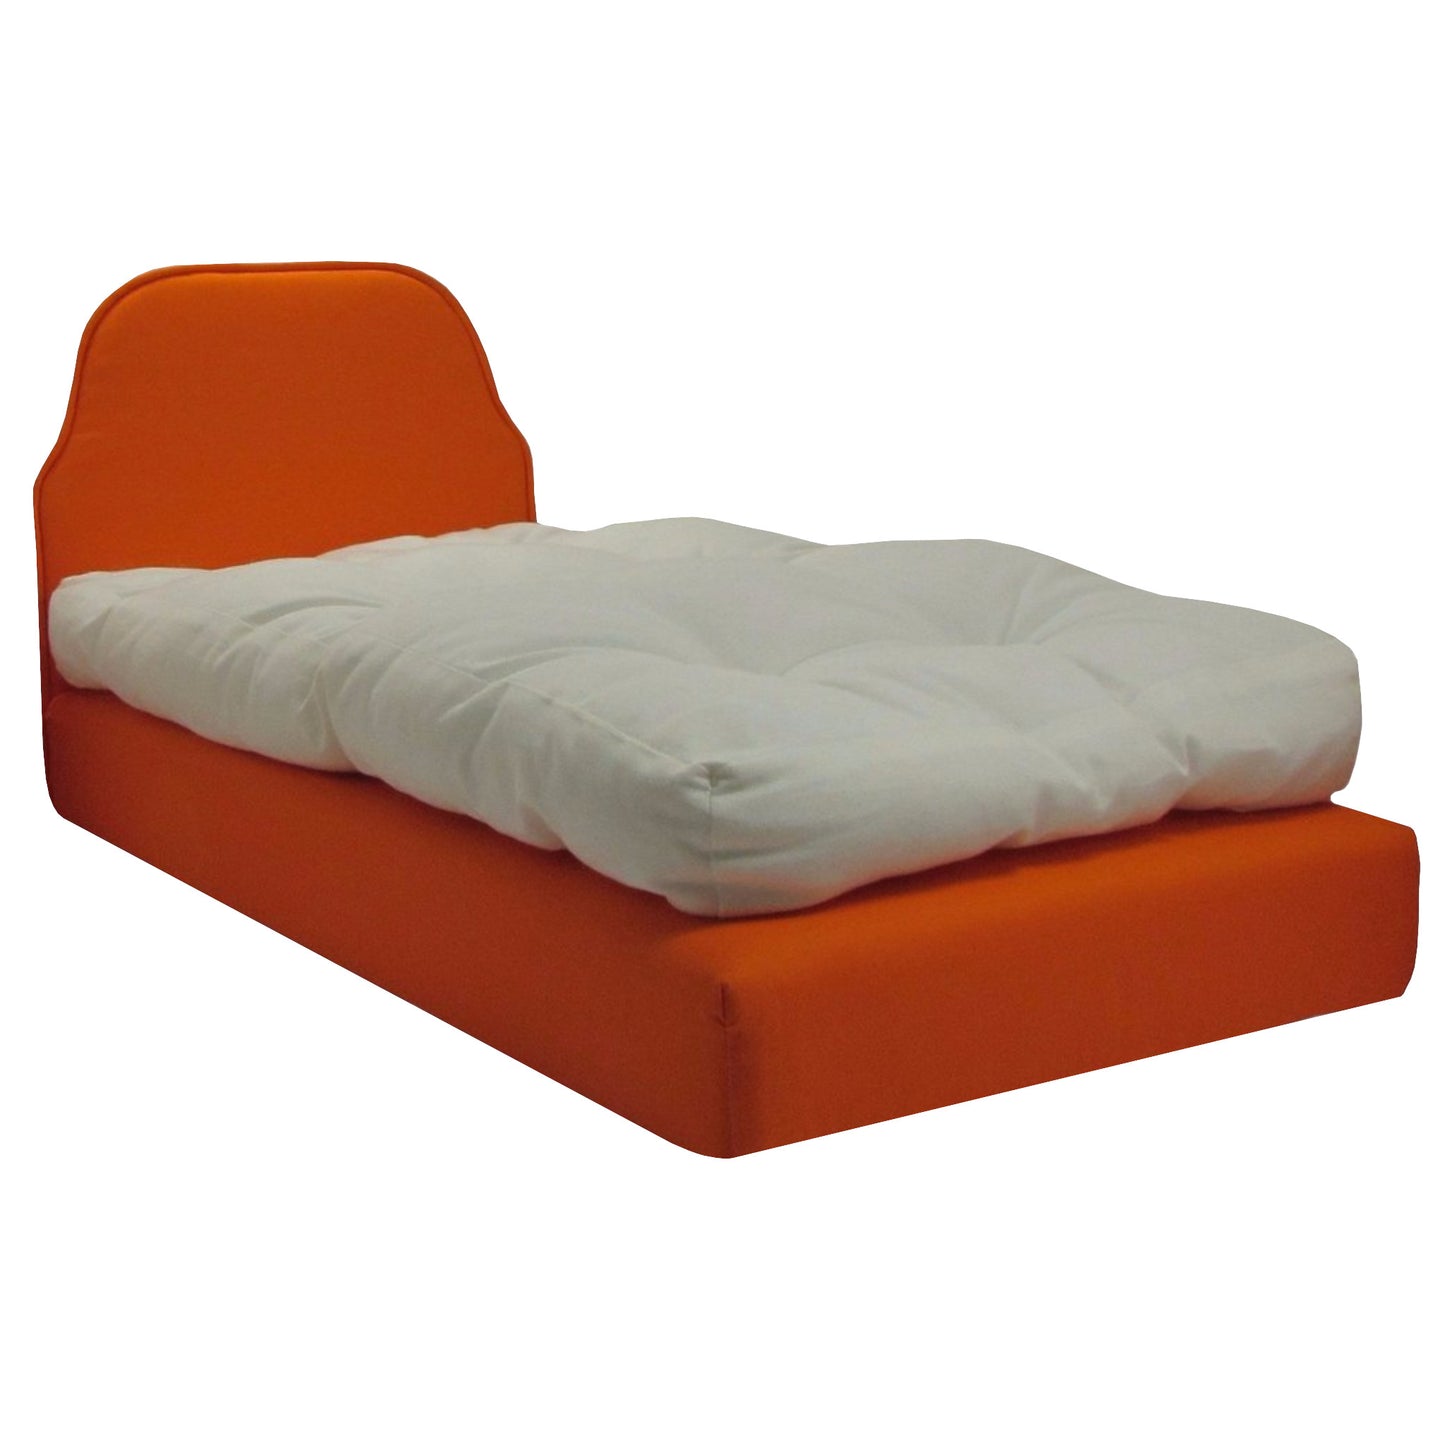 Upholstered Orange Doll Bed for 18-inch dolls 